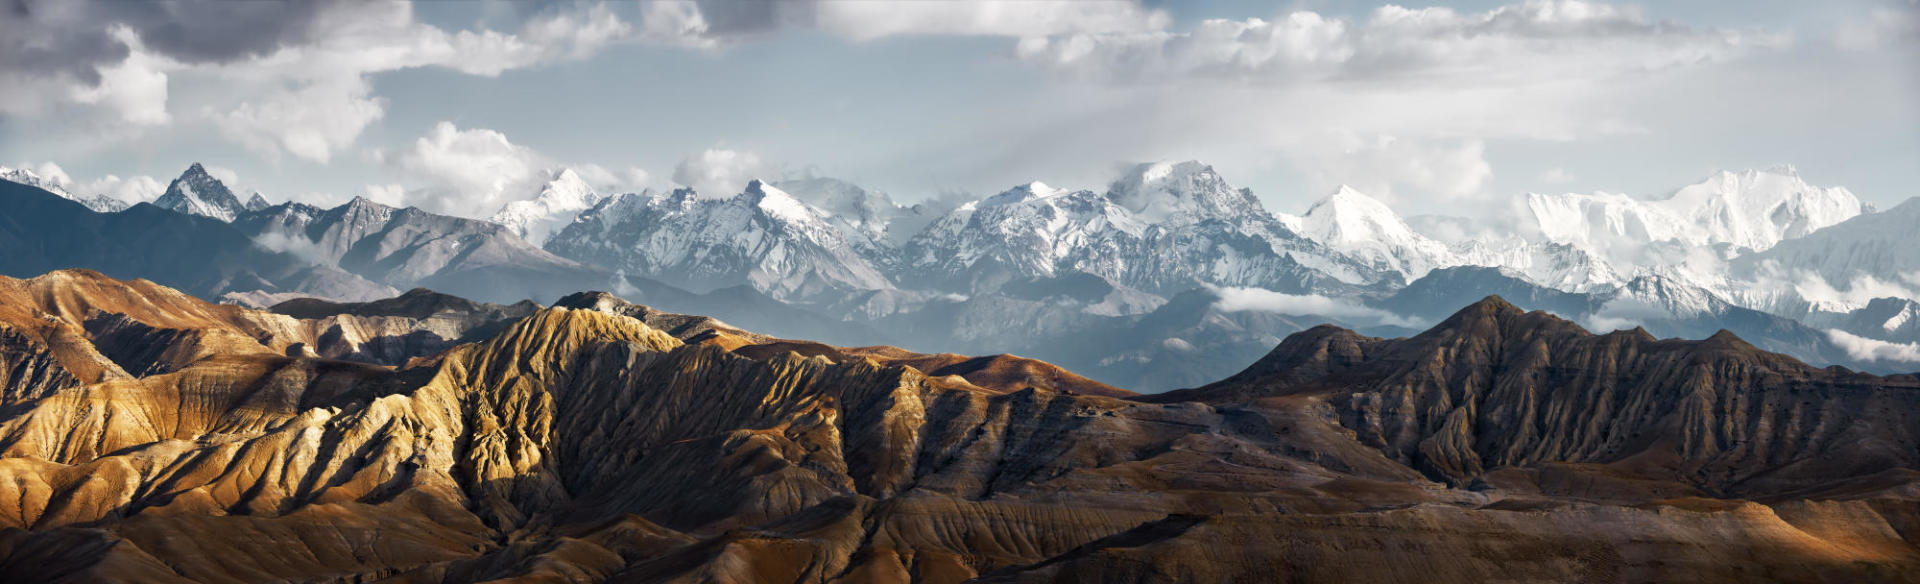 Himalaya alps landscape